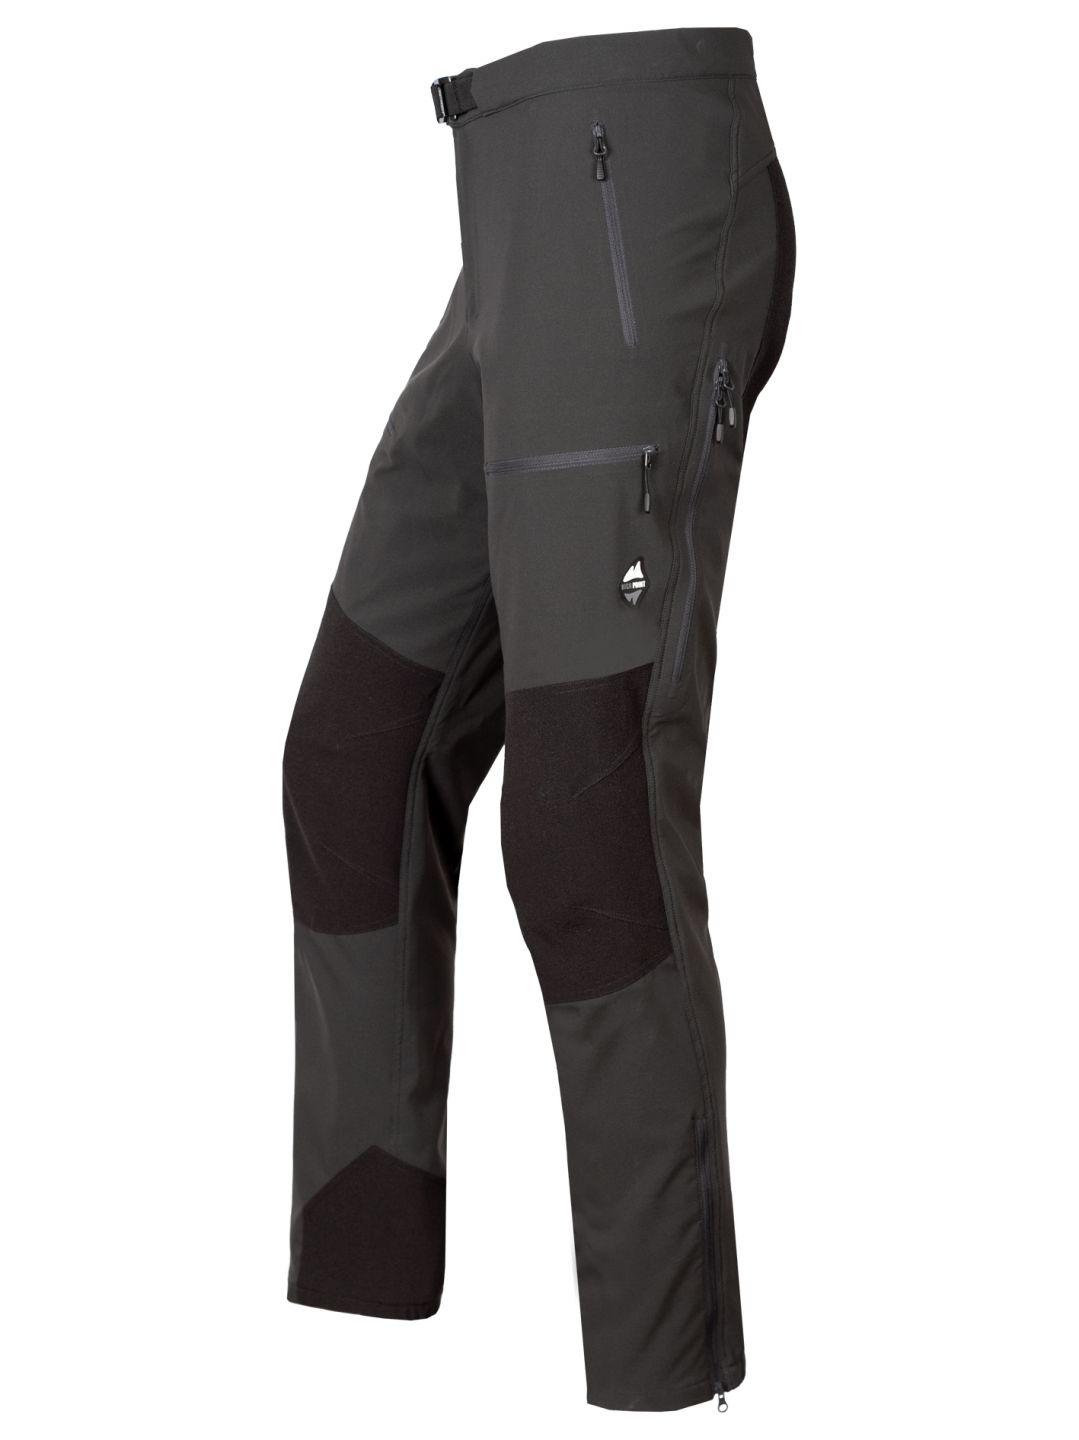 HIGH POINT Combat pants Black varianta: XL